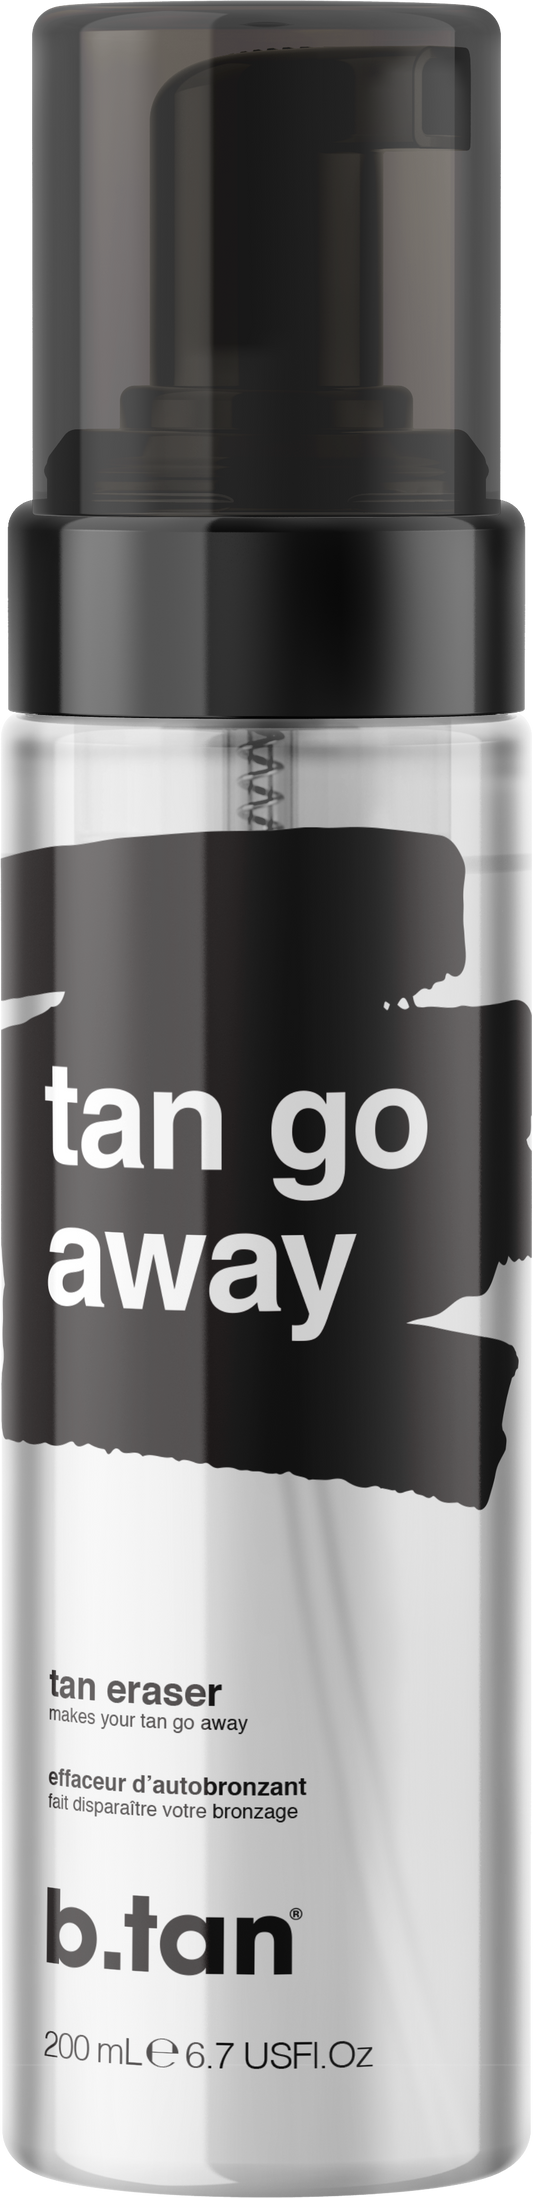 BTAN tan.go.away - tan eraser foam